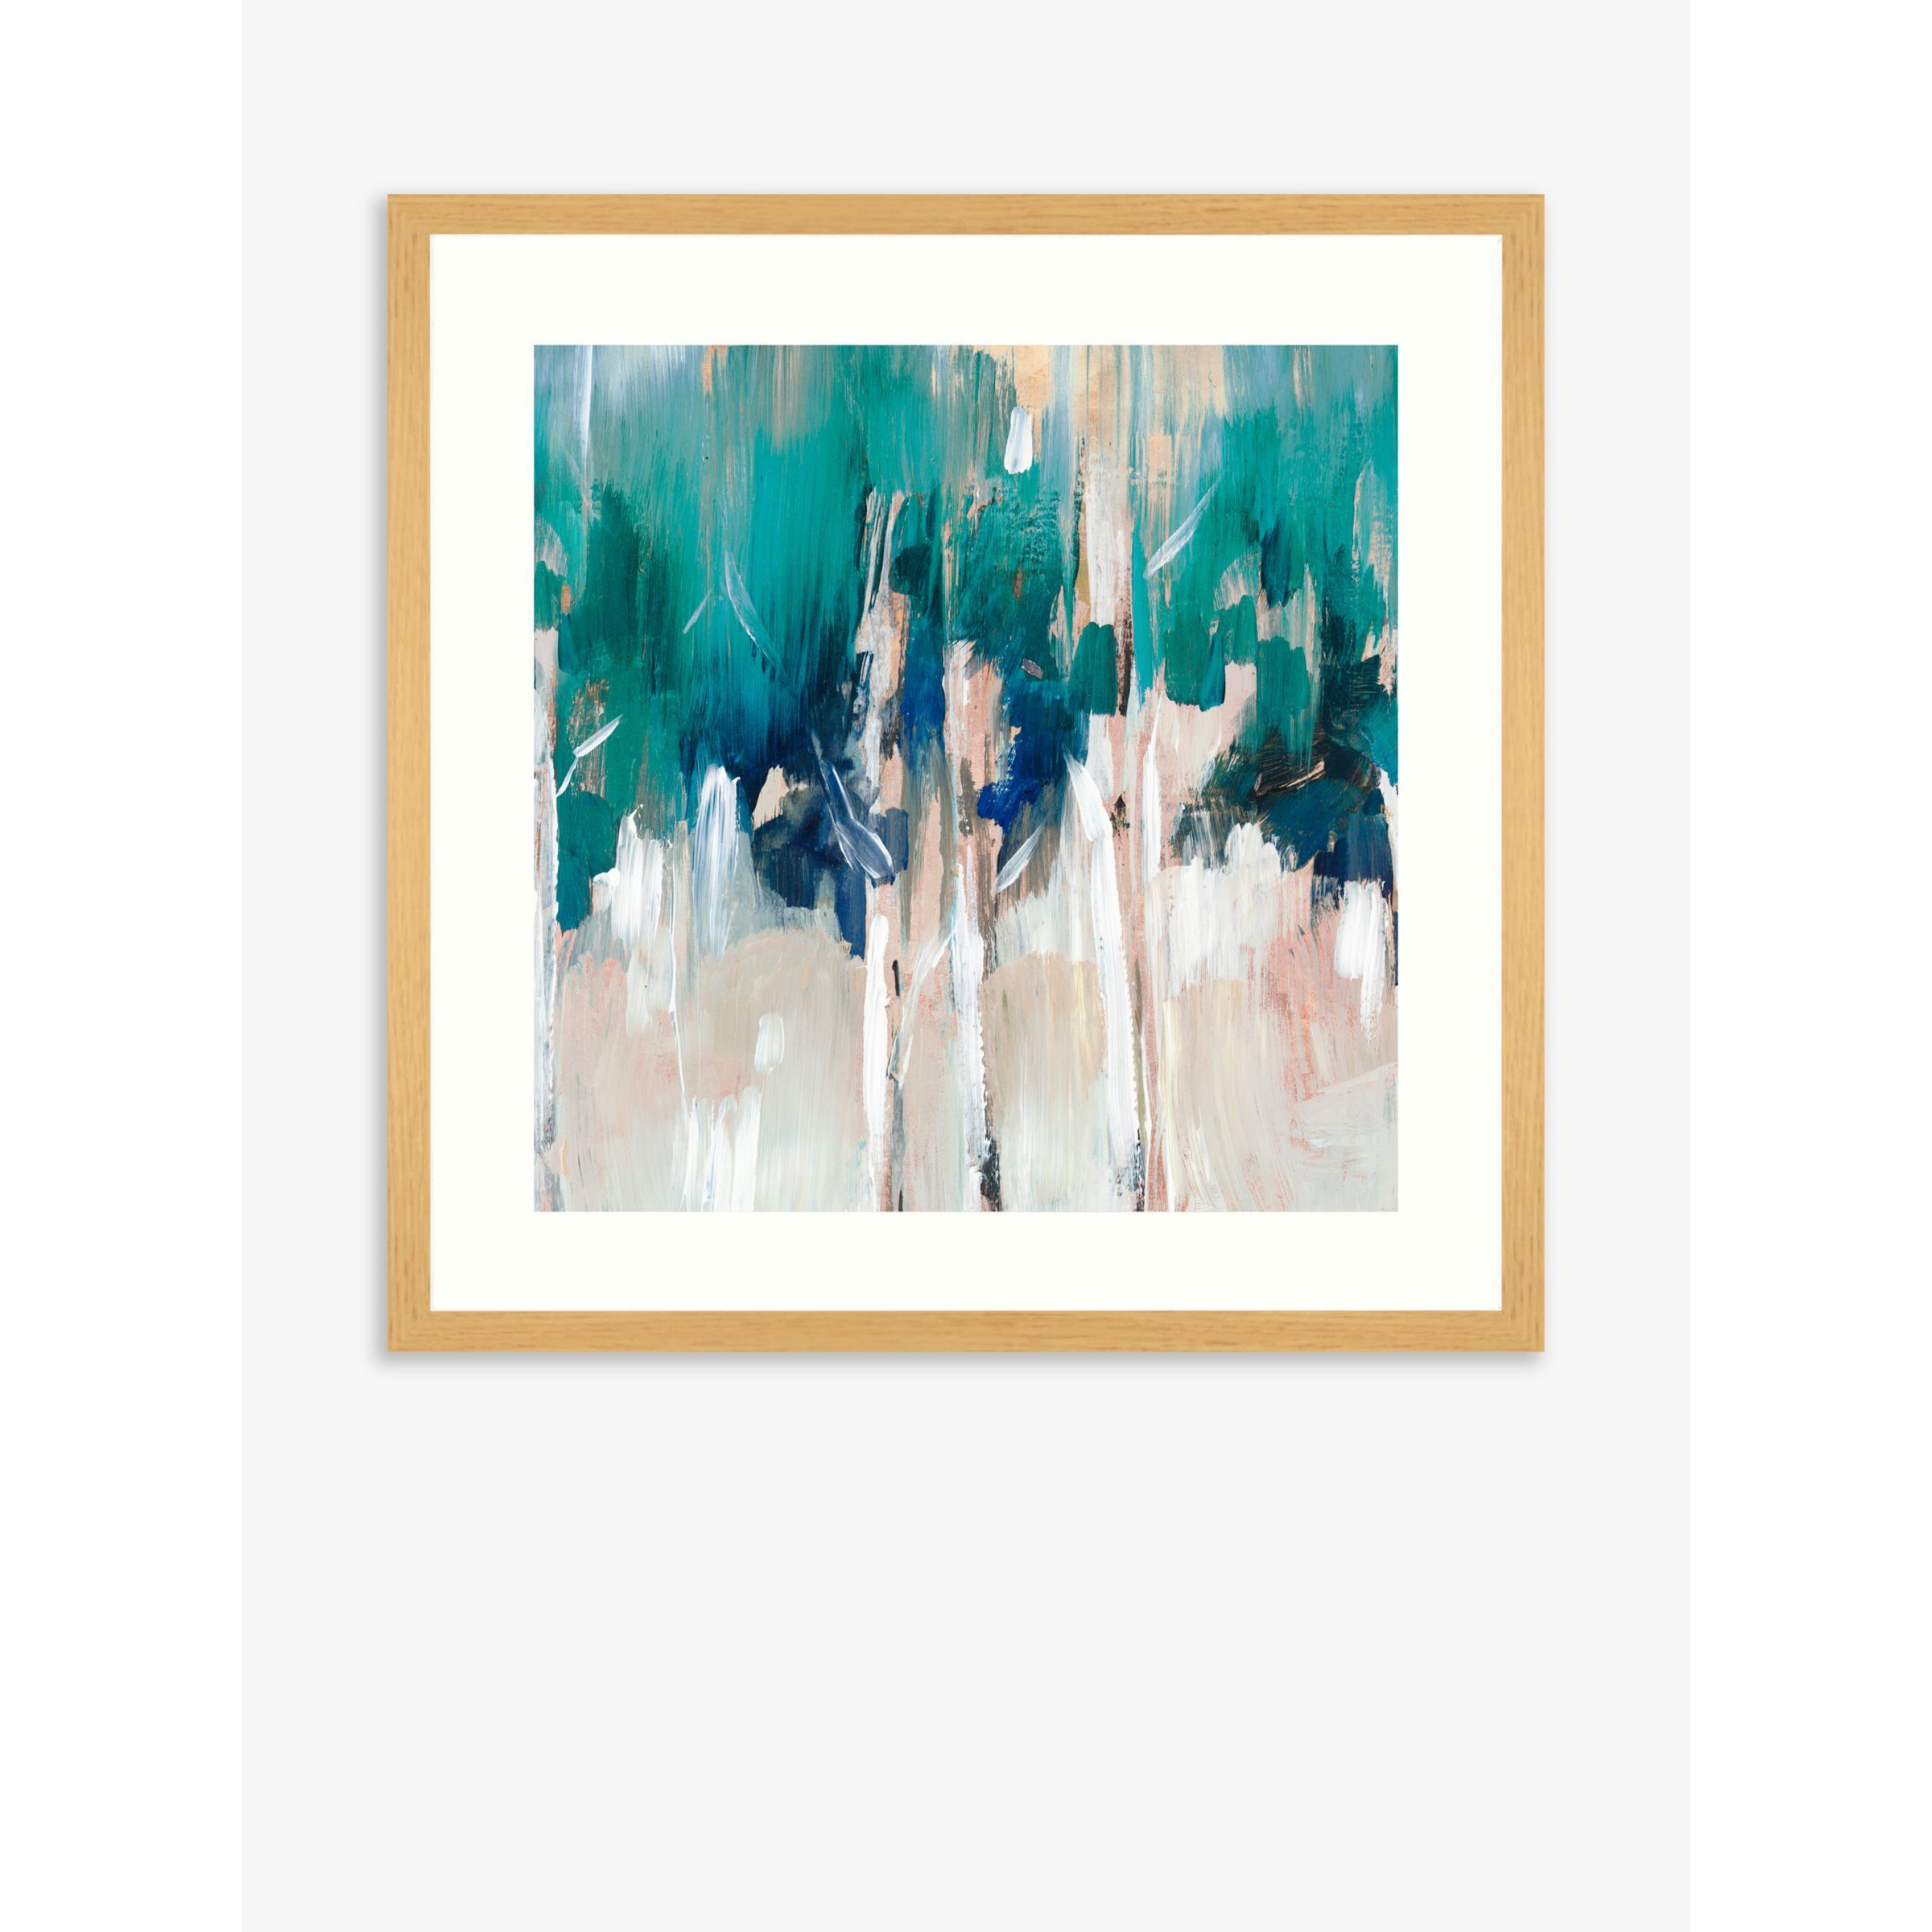 Lera - 'Teal Trees 1' Framed Print & Mount, 61.5 x 61.5cm, Teal